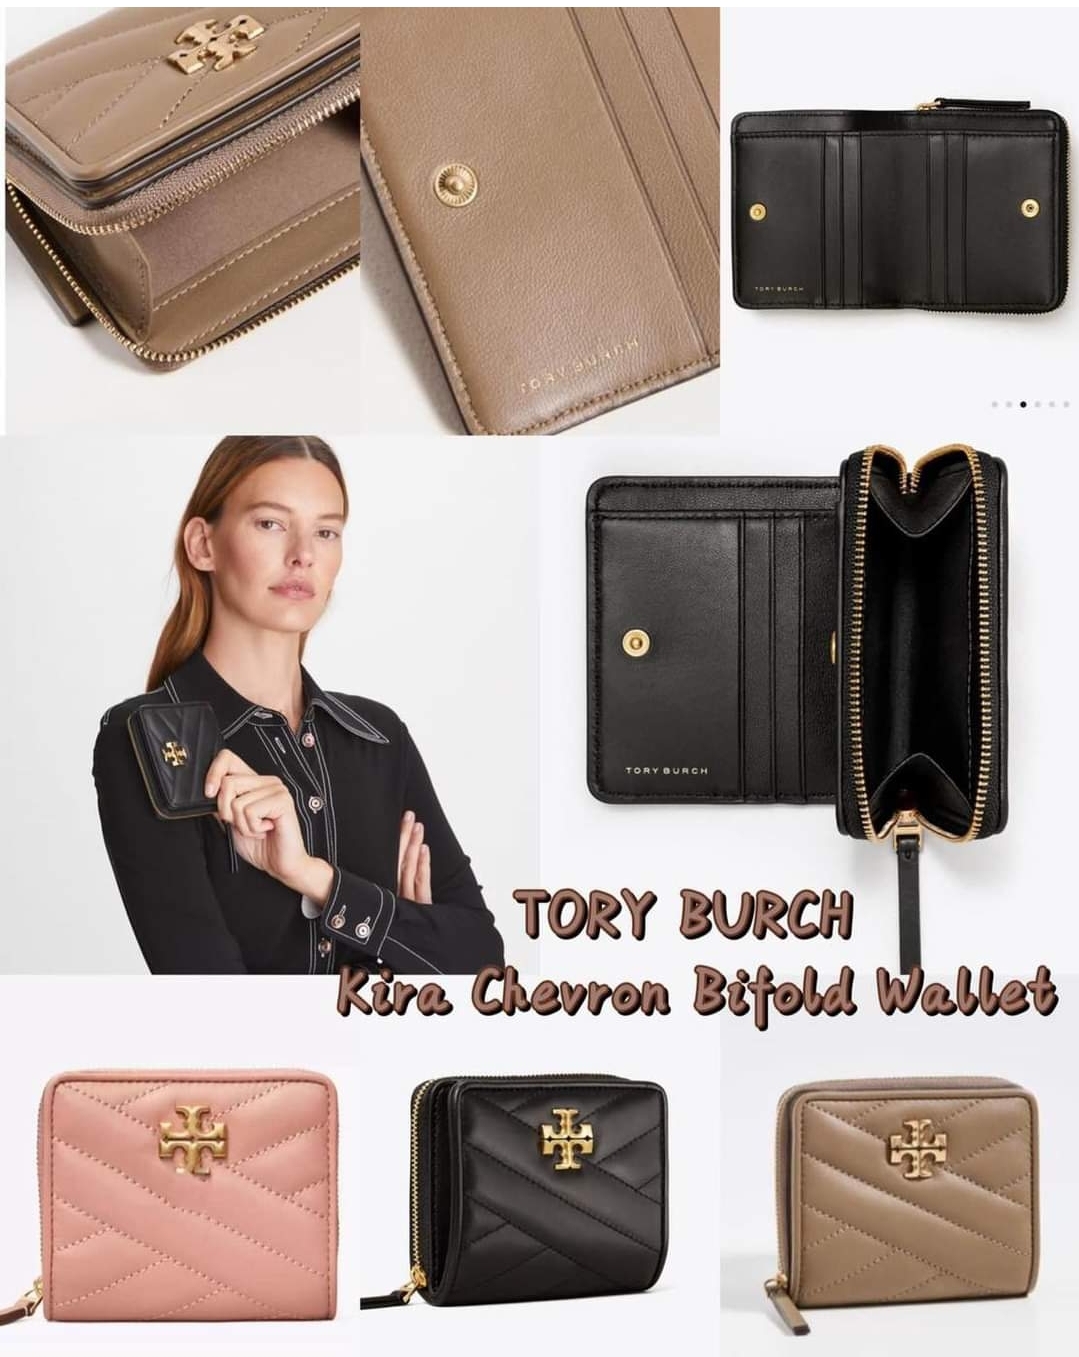 Tory Burch Kira Chevron Bi-Fold Wallet